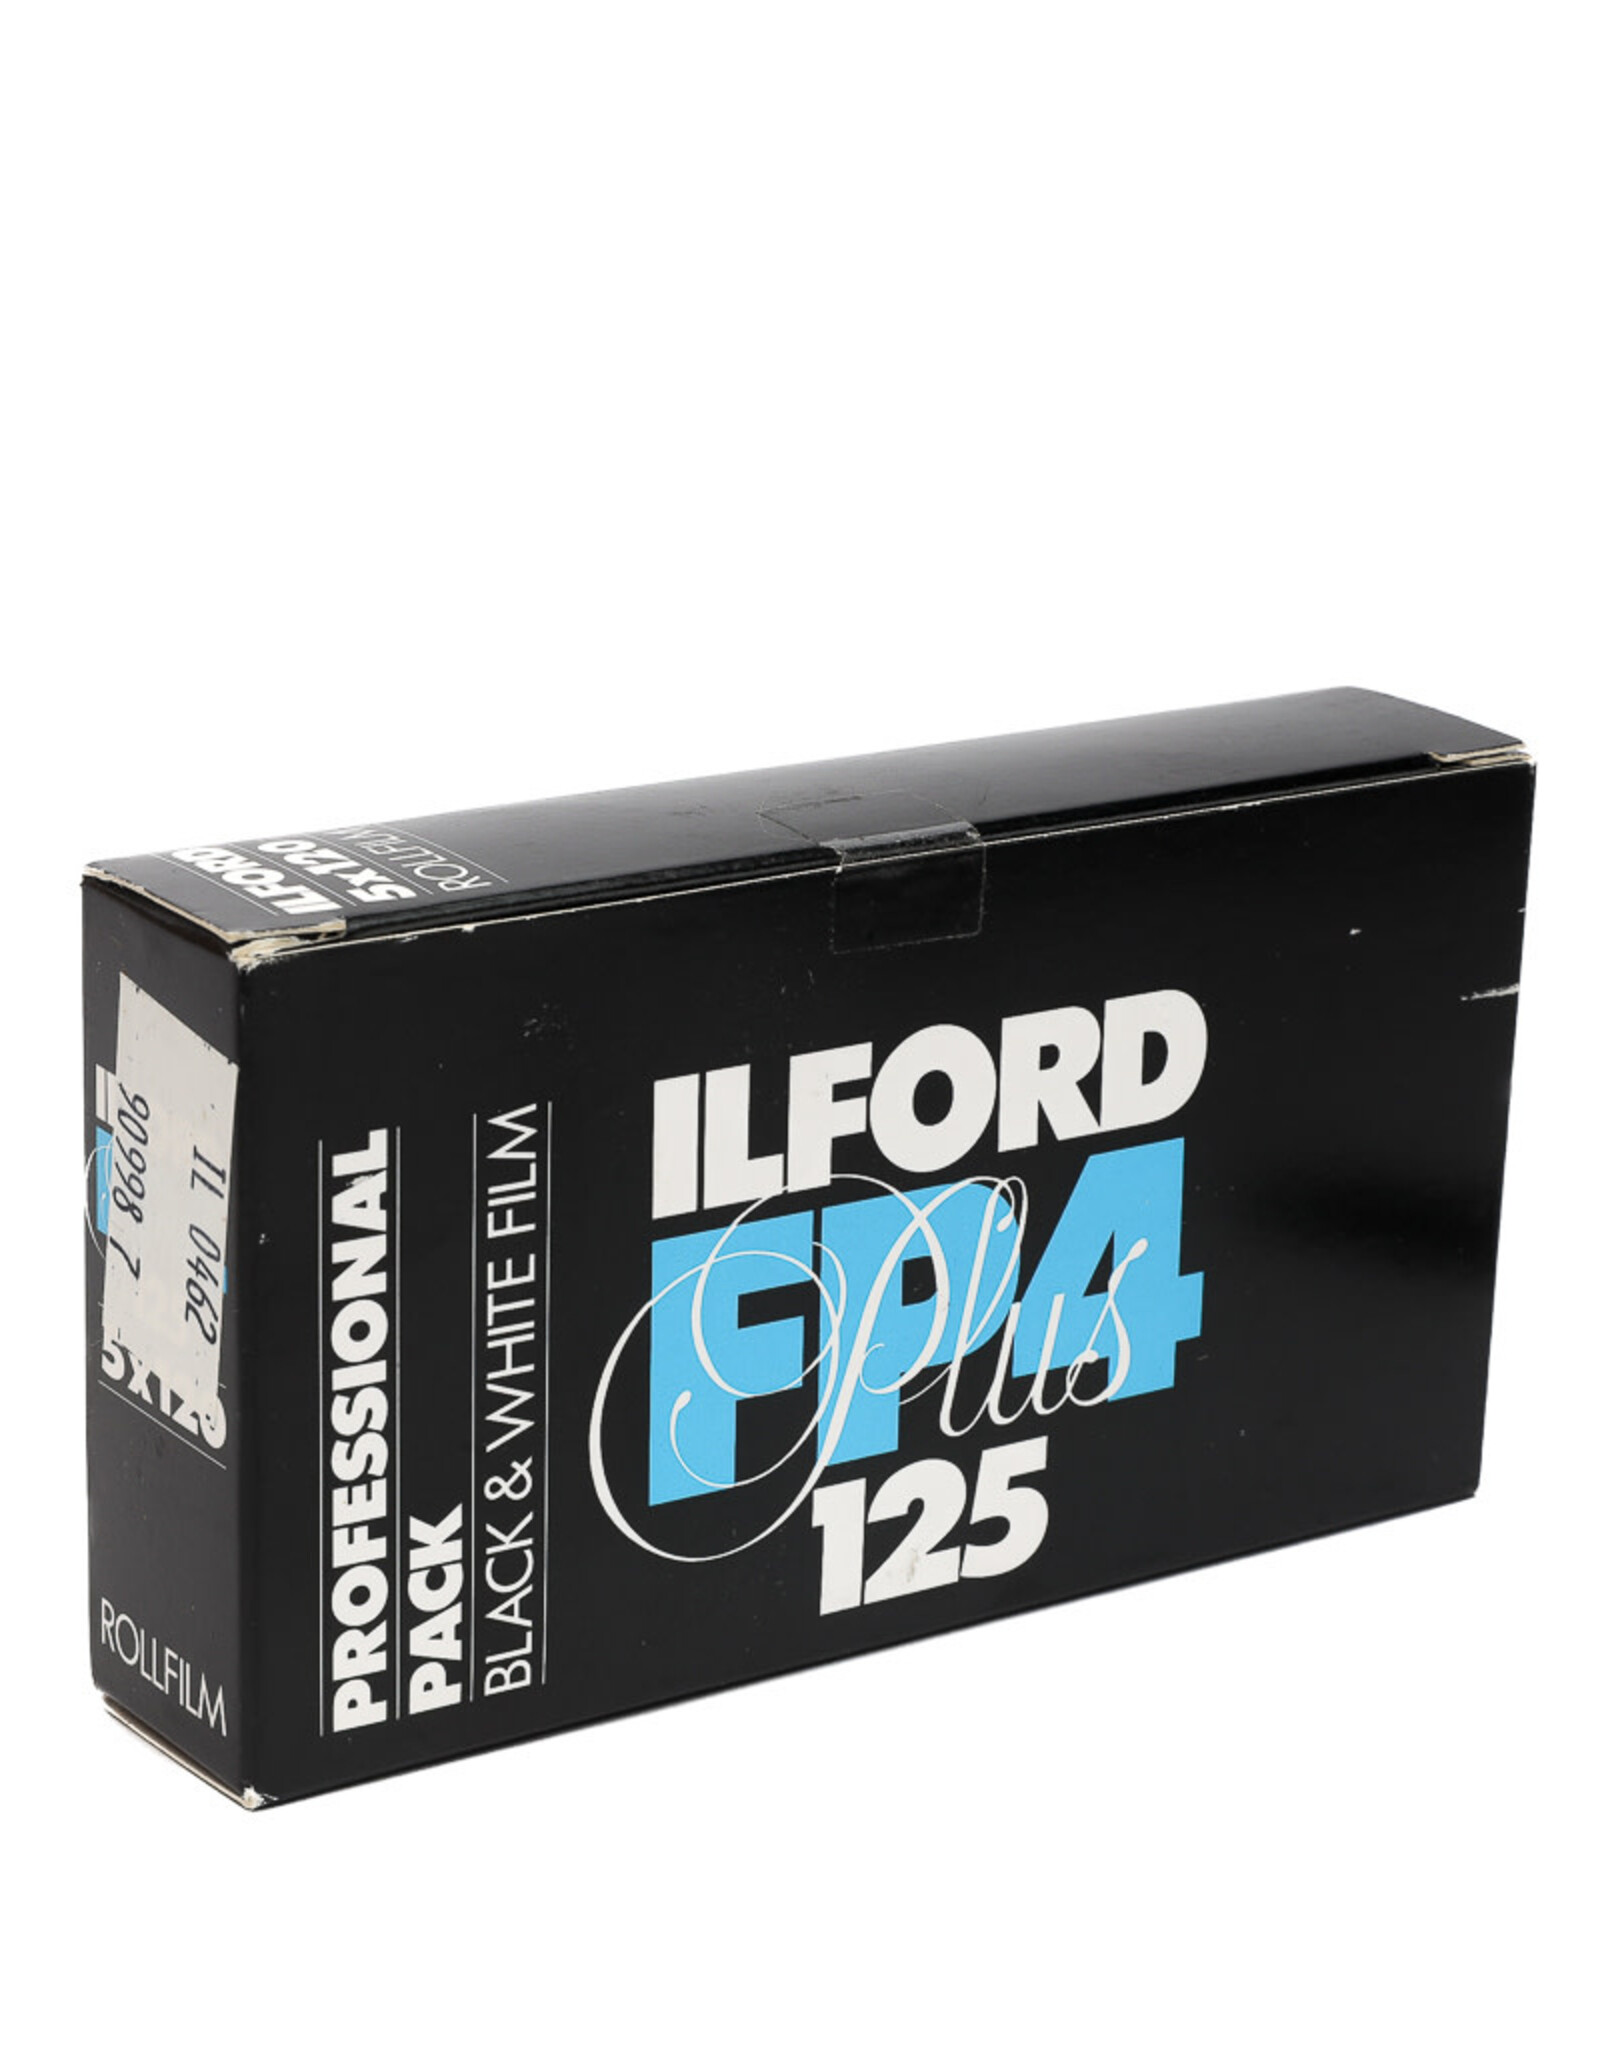 Ilford ILFORD FP4 Plus 120 Film *Expired 02/21 kept frozen